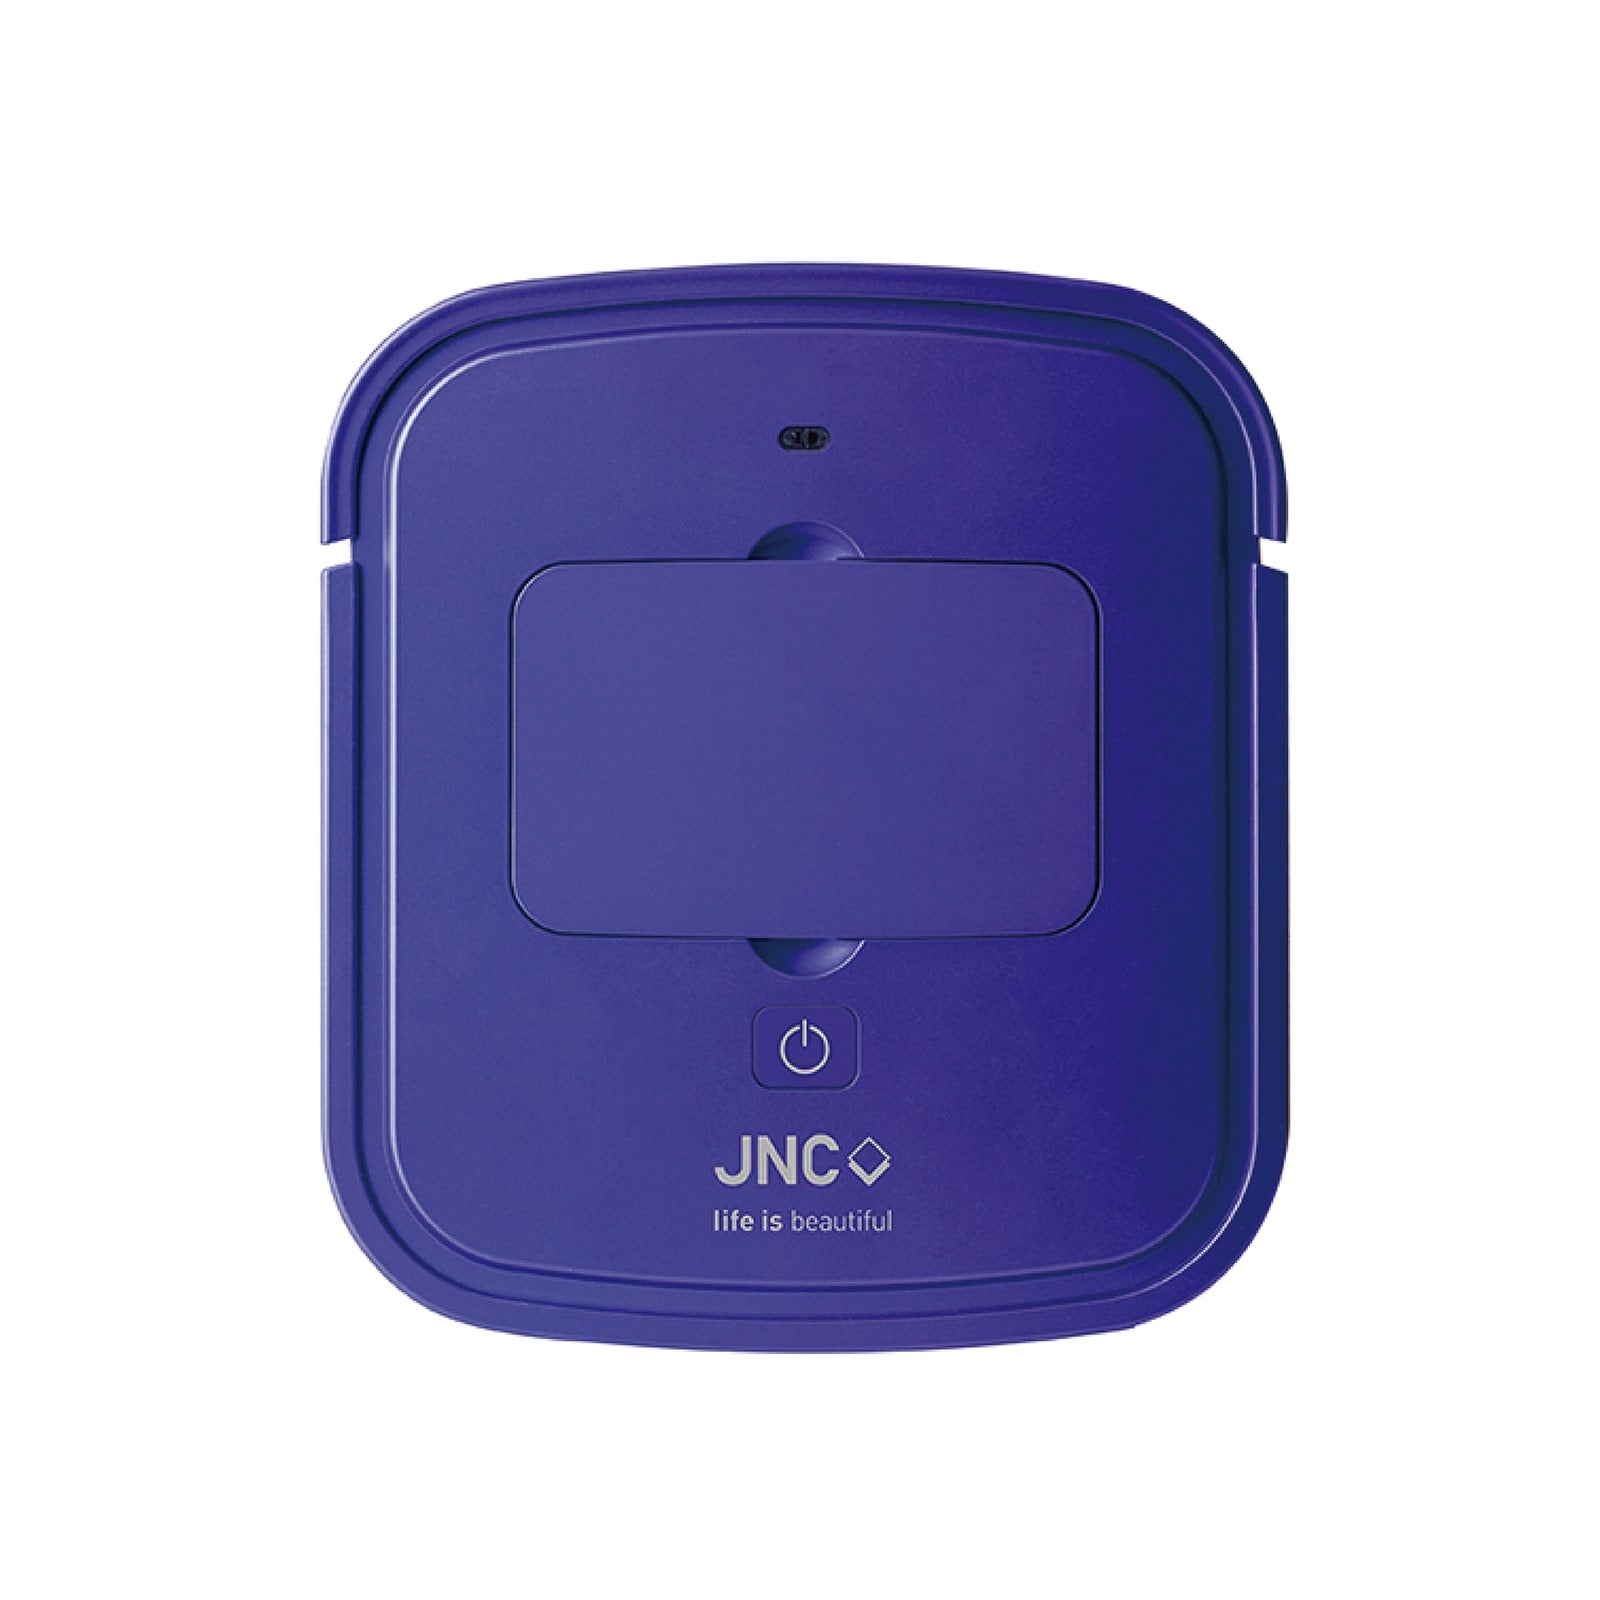 JNC 纖薄智能吸塵機 2Teeny Tiny Robot Vacuum Cleaner 2